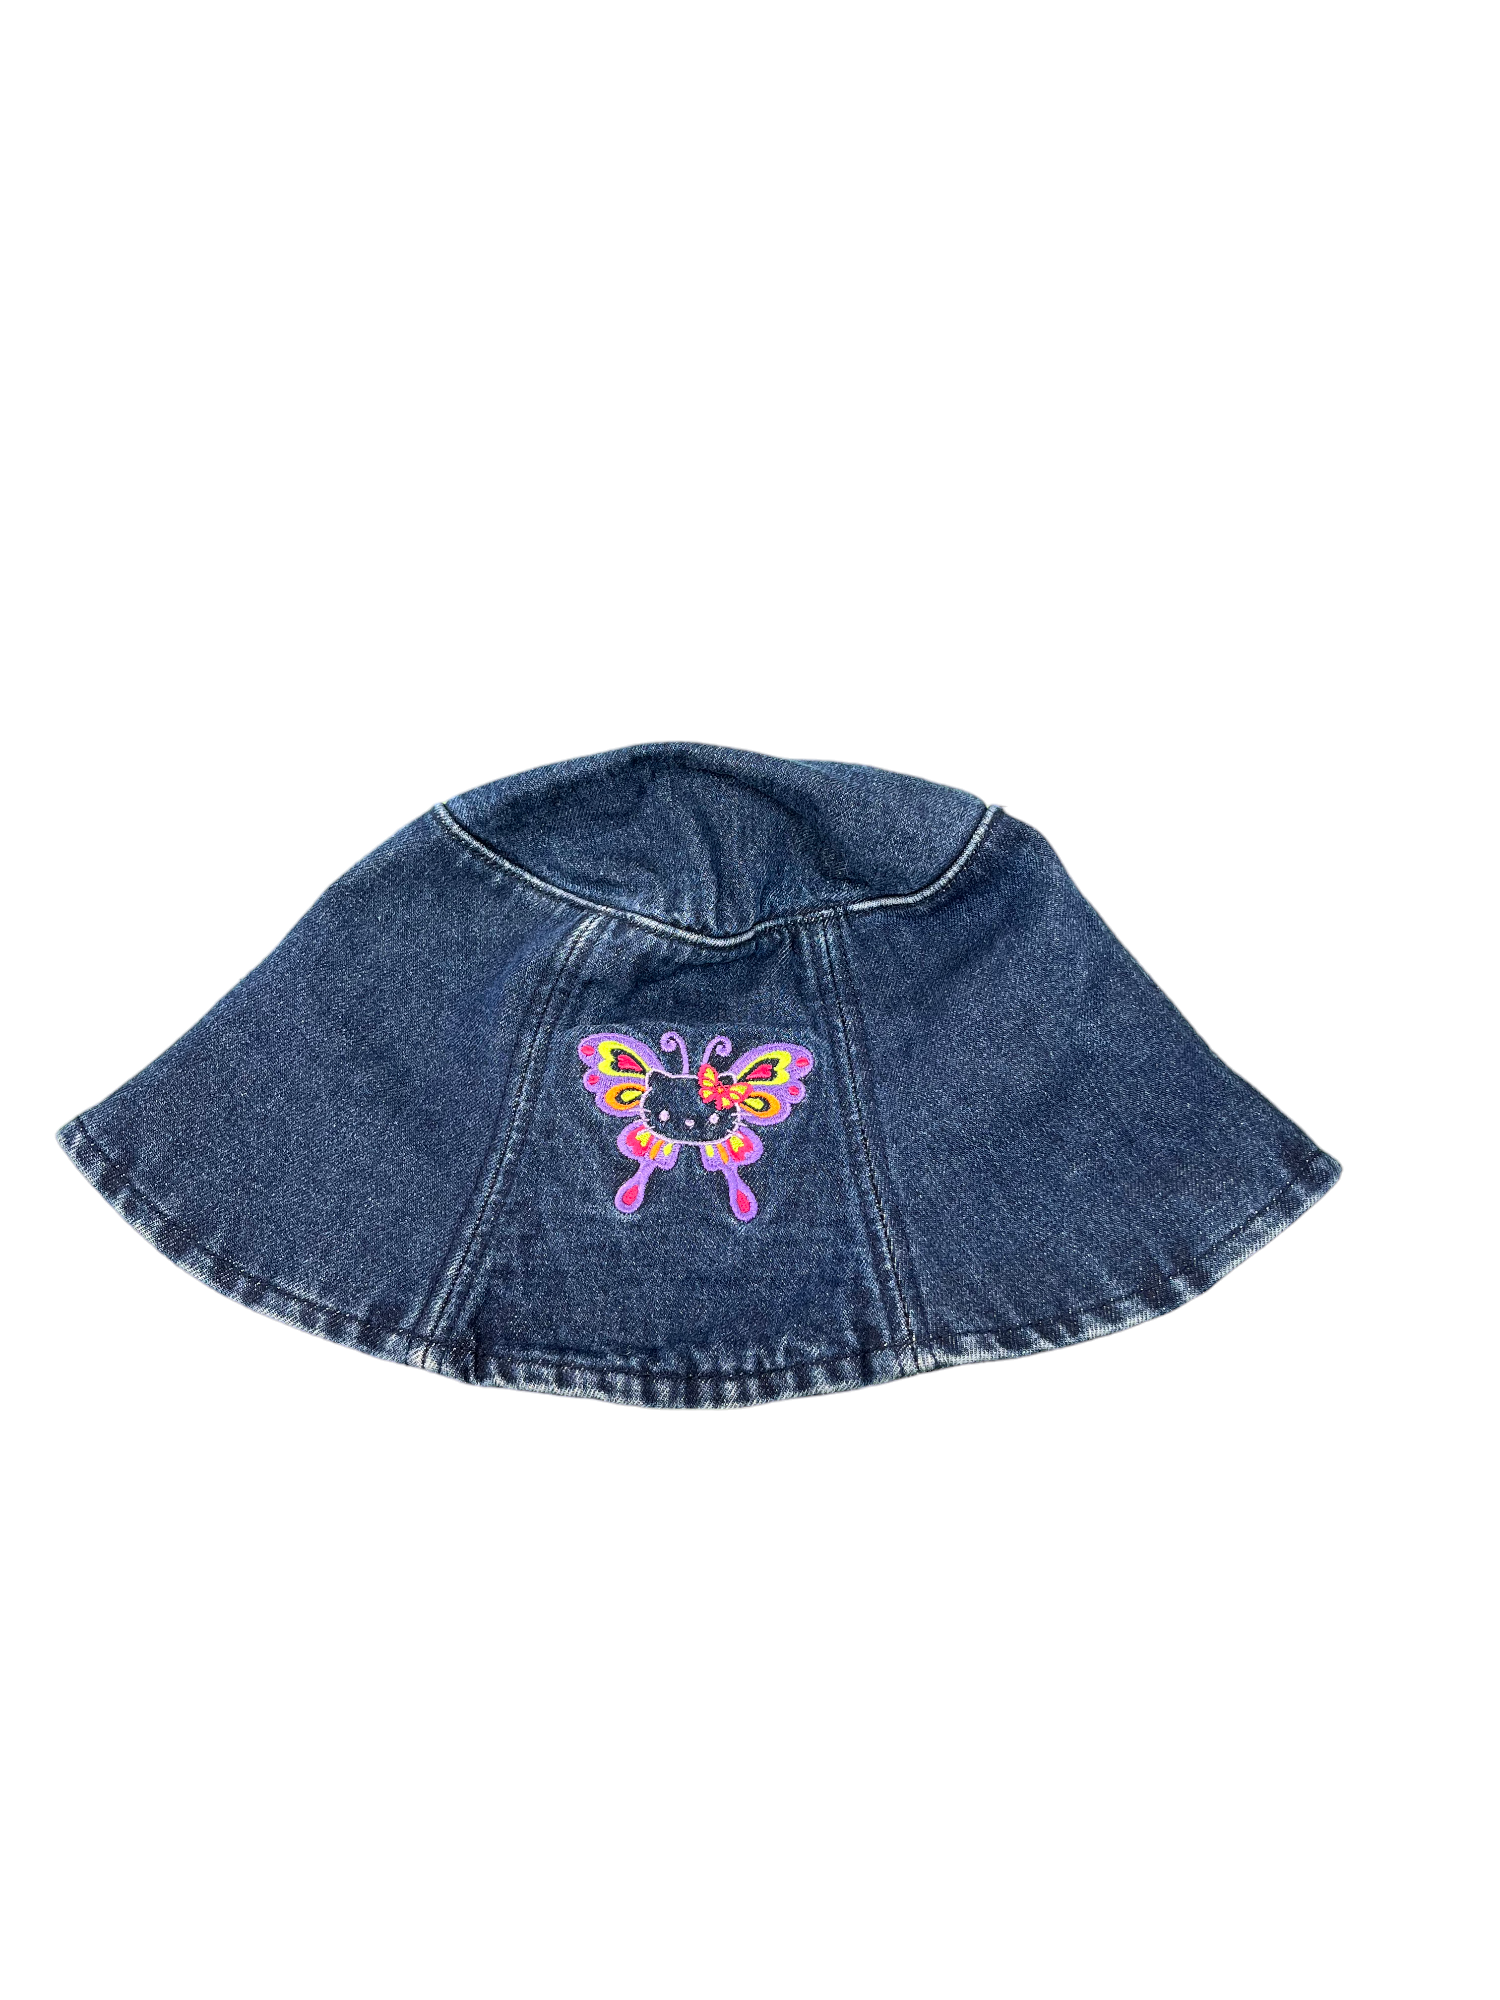 2000s Hello Kitty Butterfly Bucket Hat